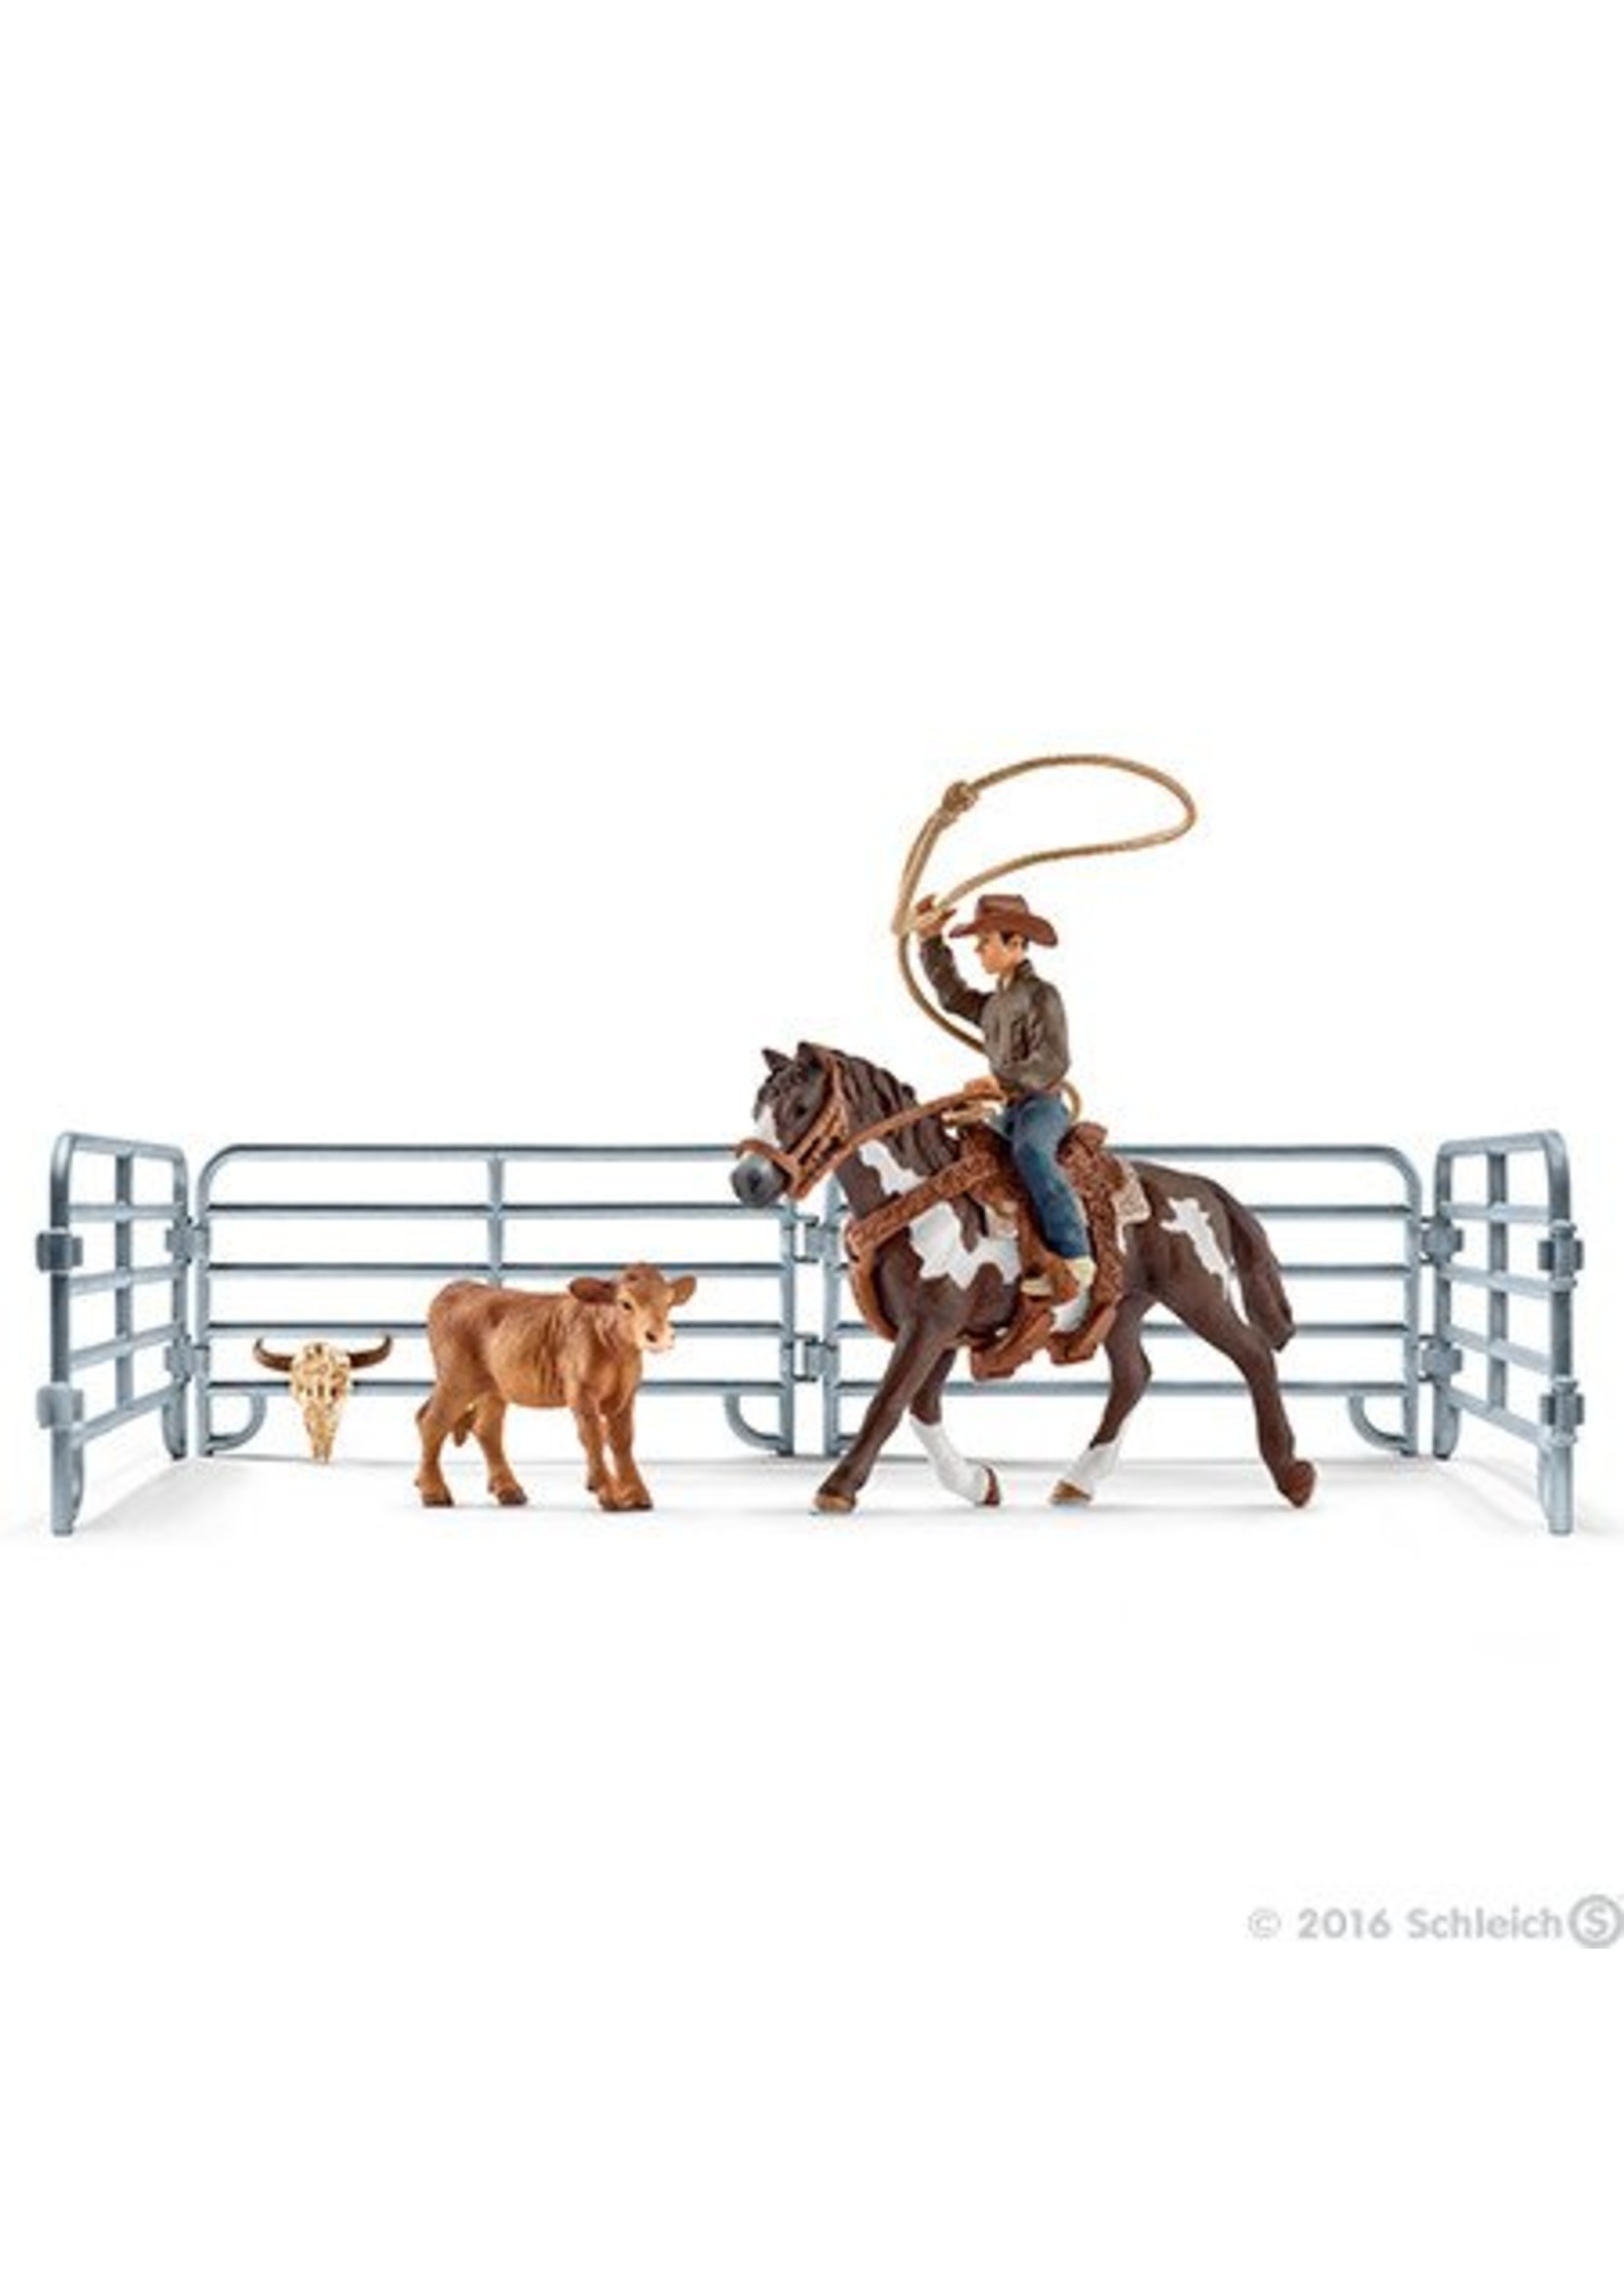 Schleich Team Roping with Cowboy (41418)